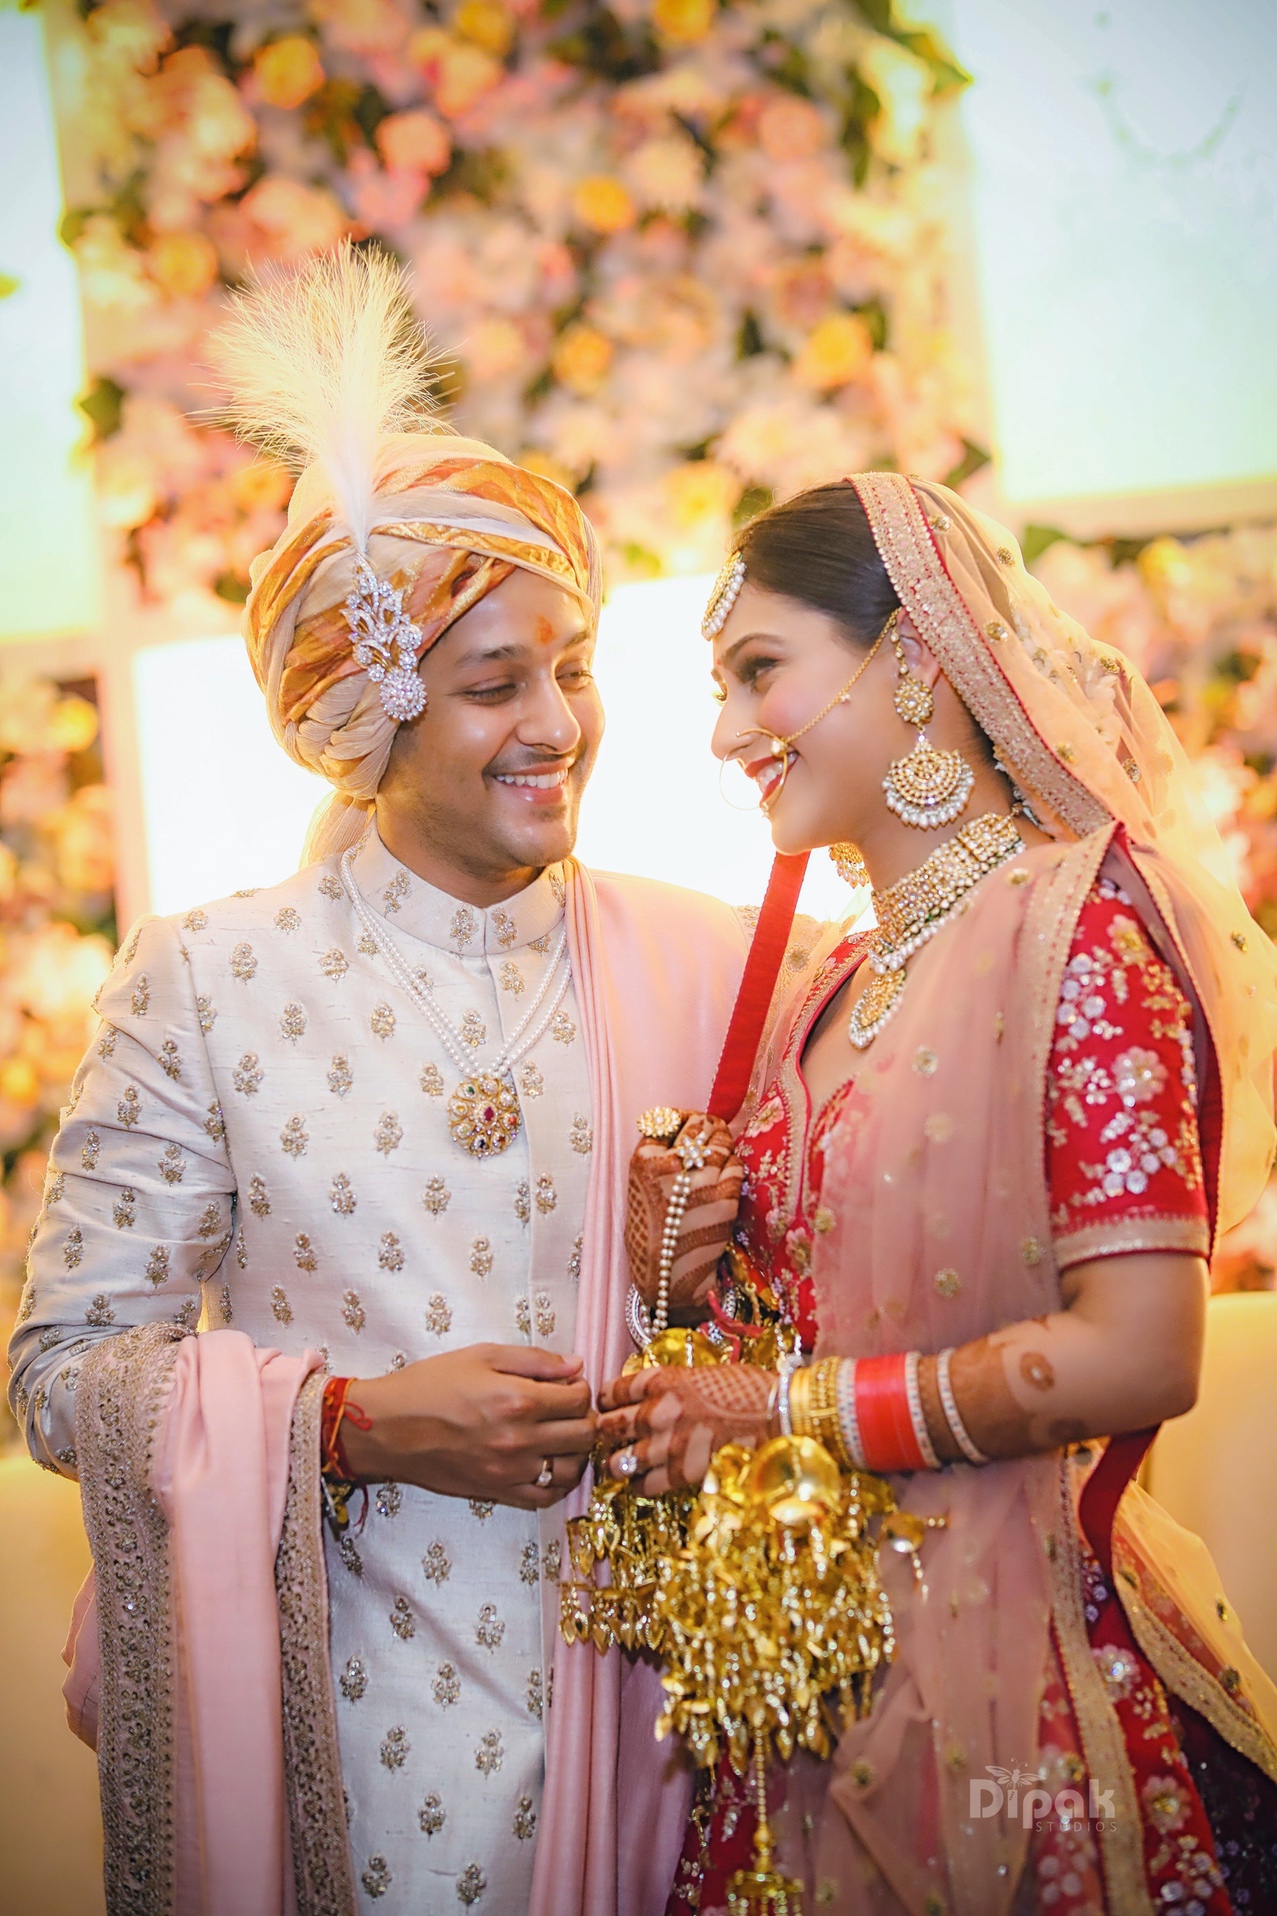 Indian wedding Couple Photography | Couples of Dipak Studios | Couples